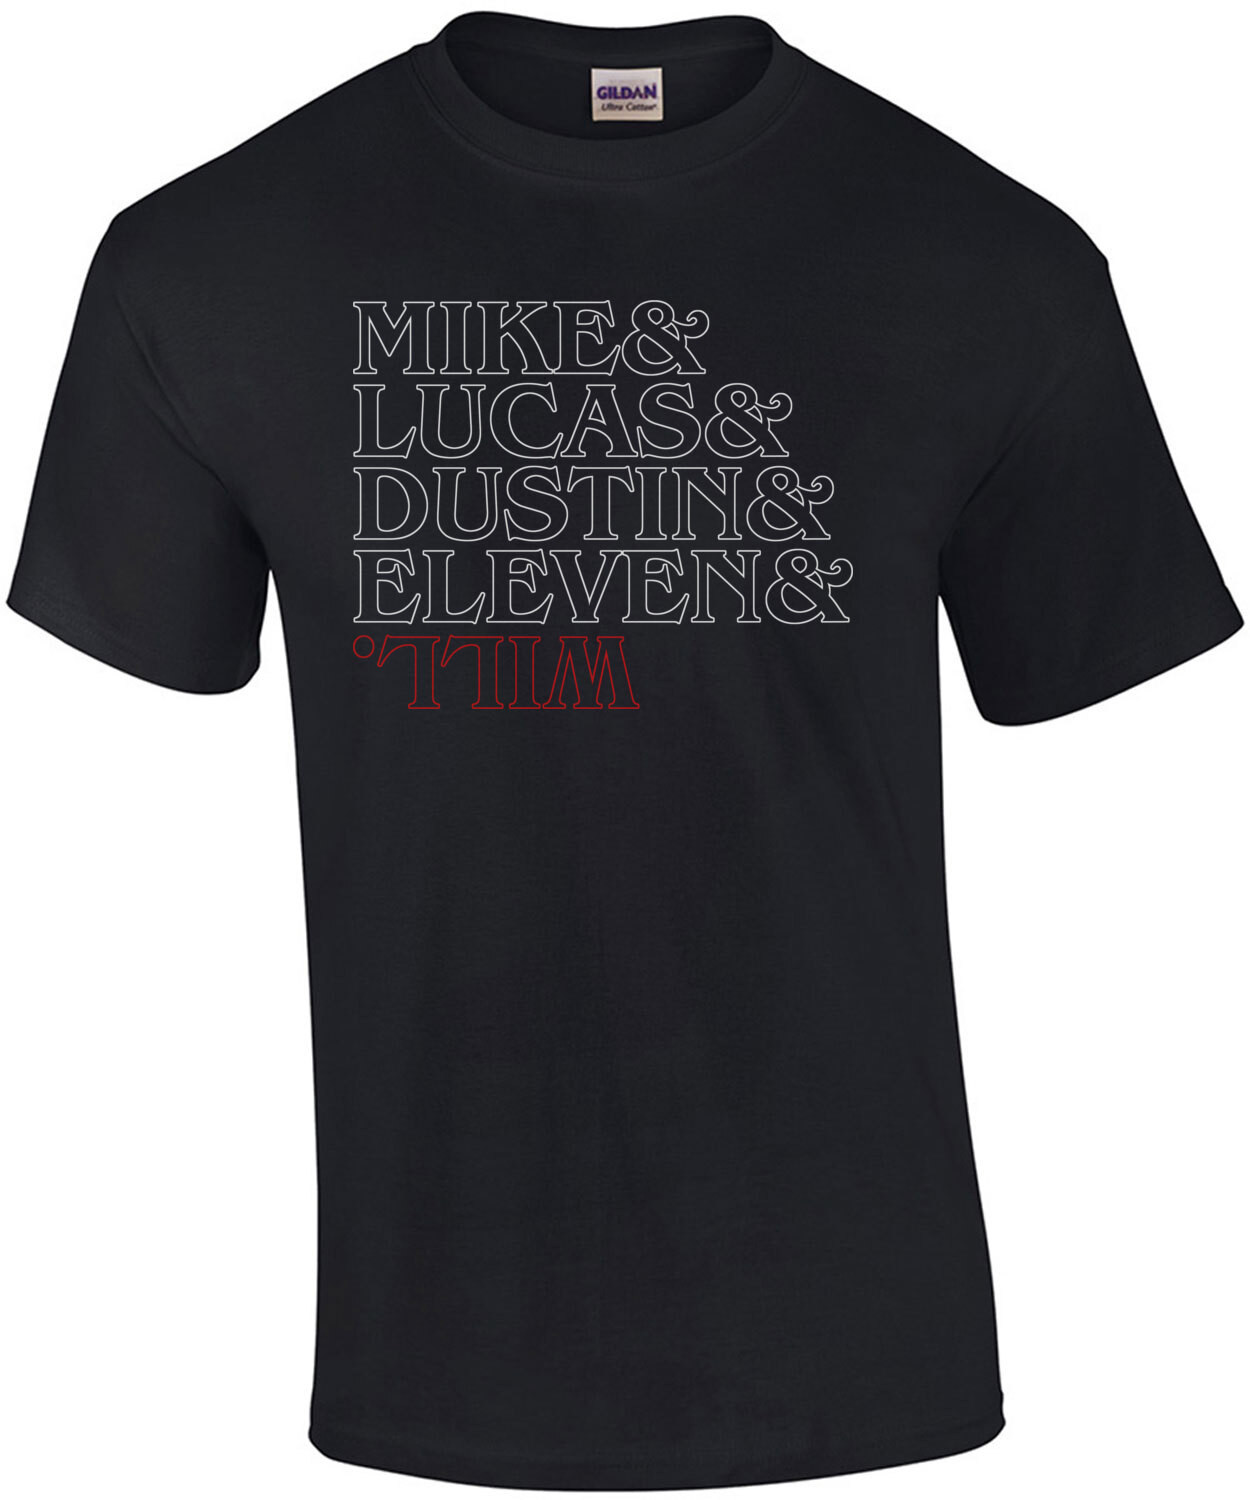 Mike & Lucas & Dustin & Eleven & Will Upside Down - Stranger Things Shirt